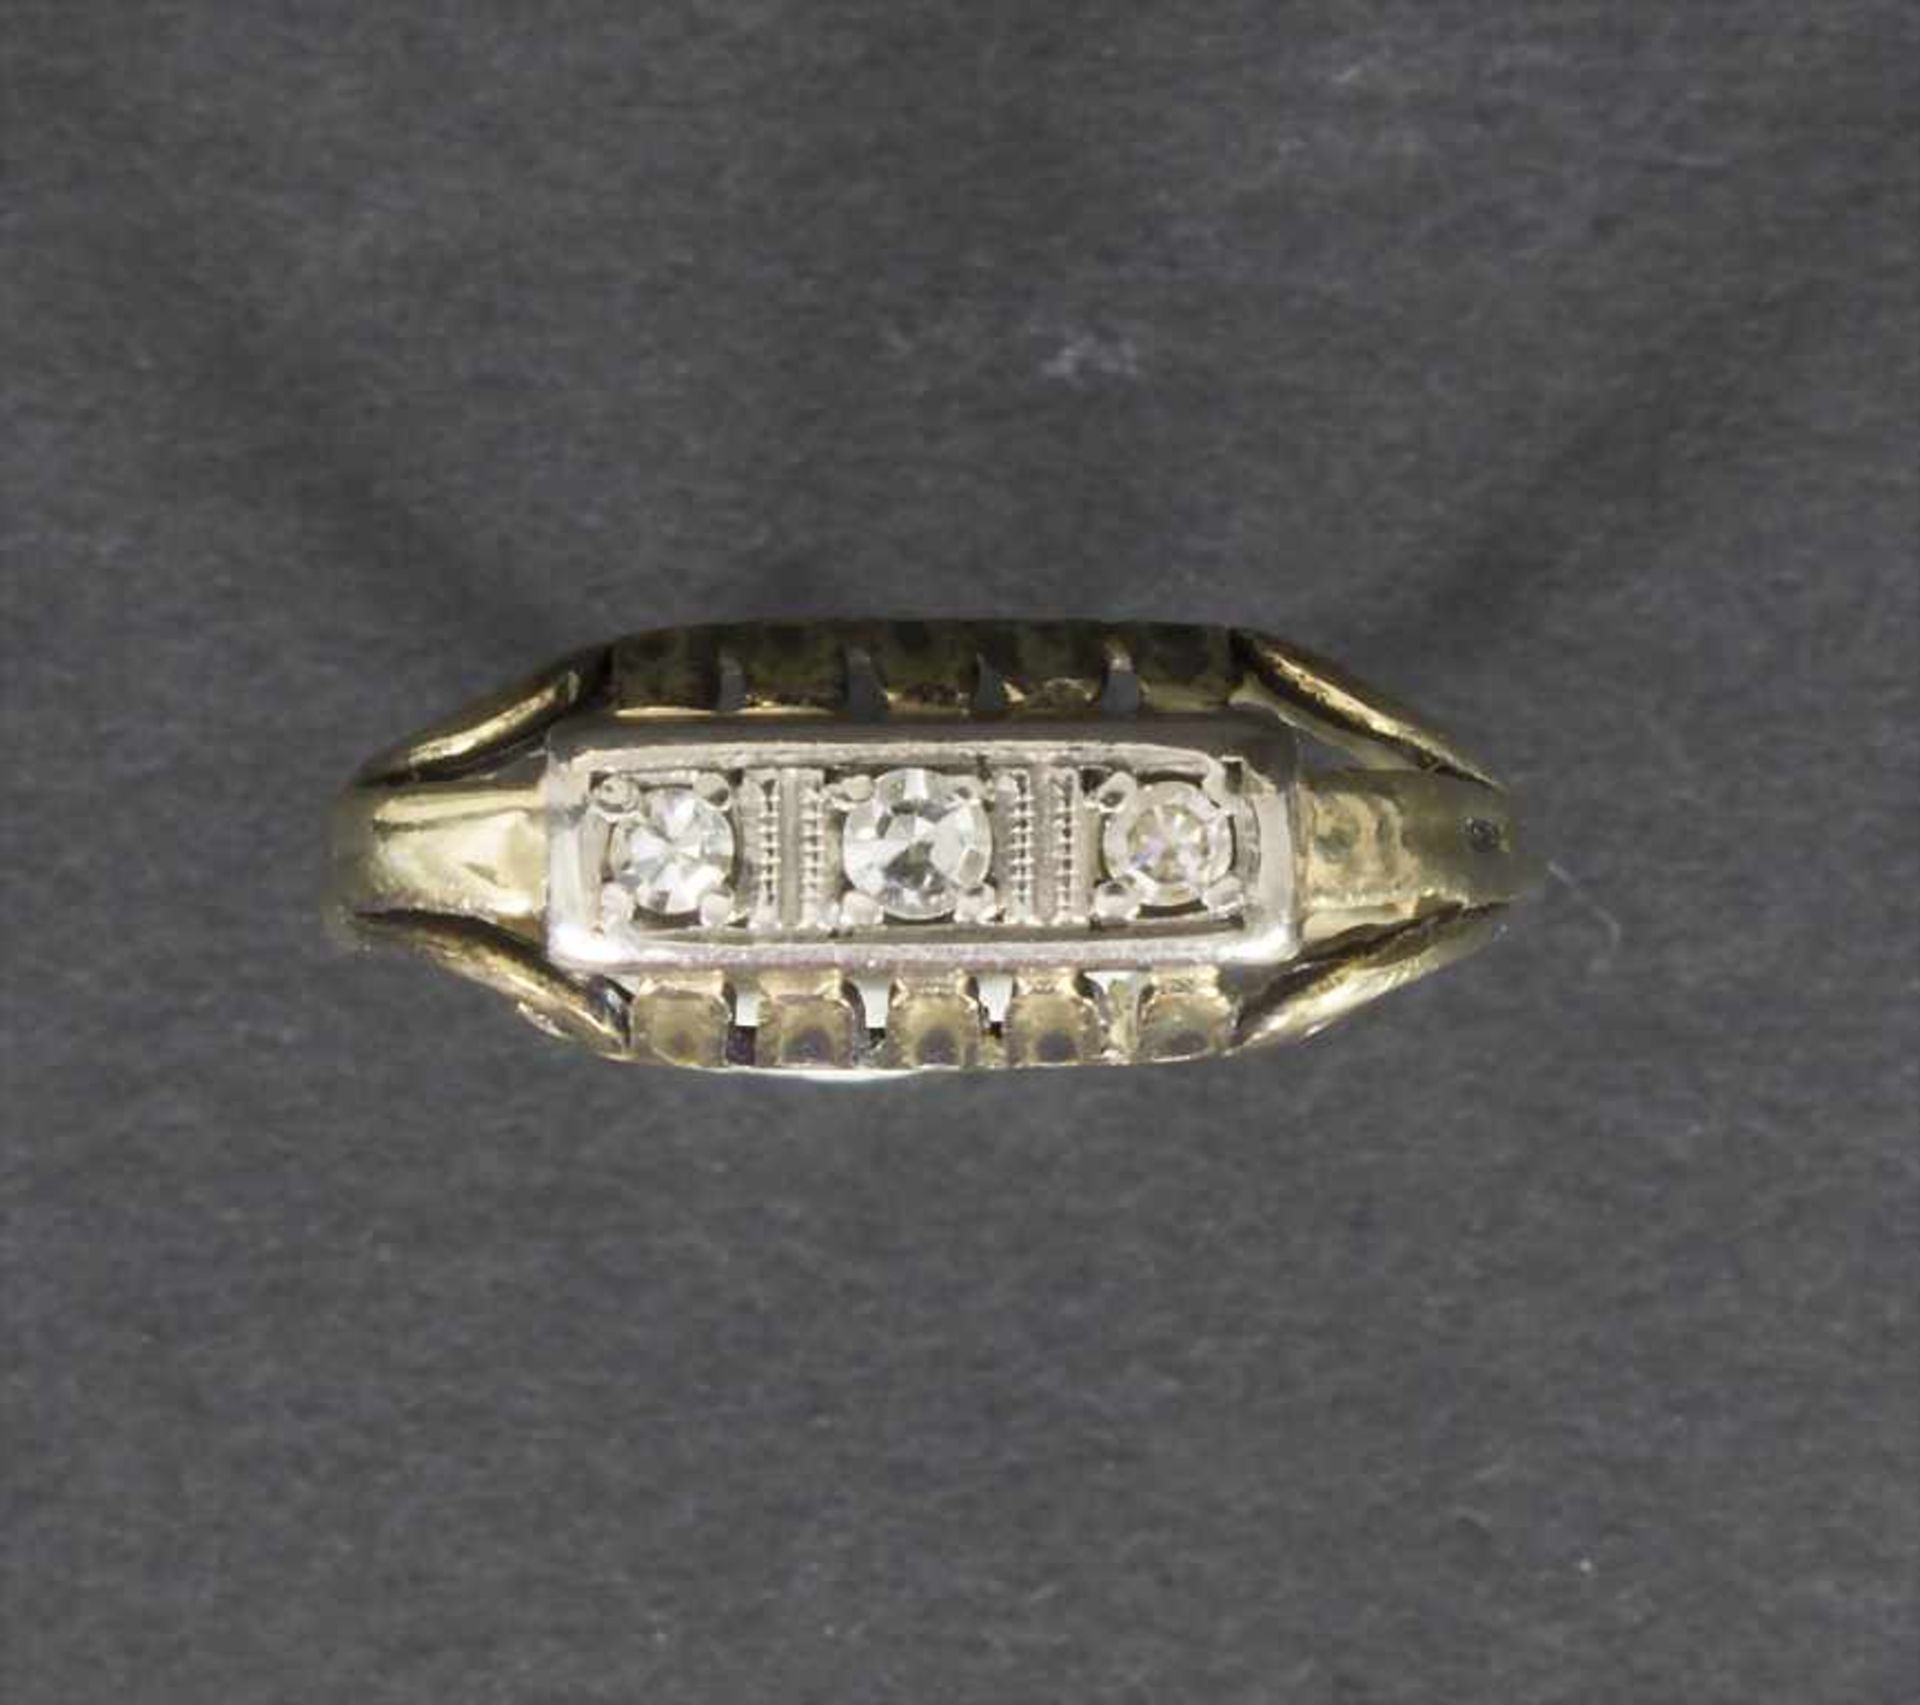 Damenring mit Diamanten / A ladies ring with diamondsMaterial: GG 585/000, Diamanten zus. ca. 0,1